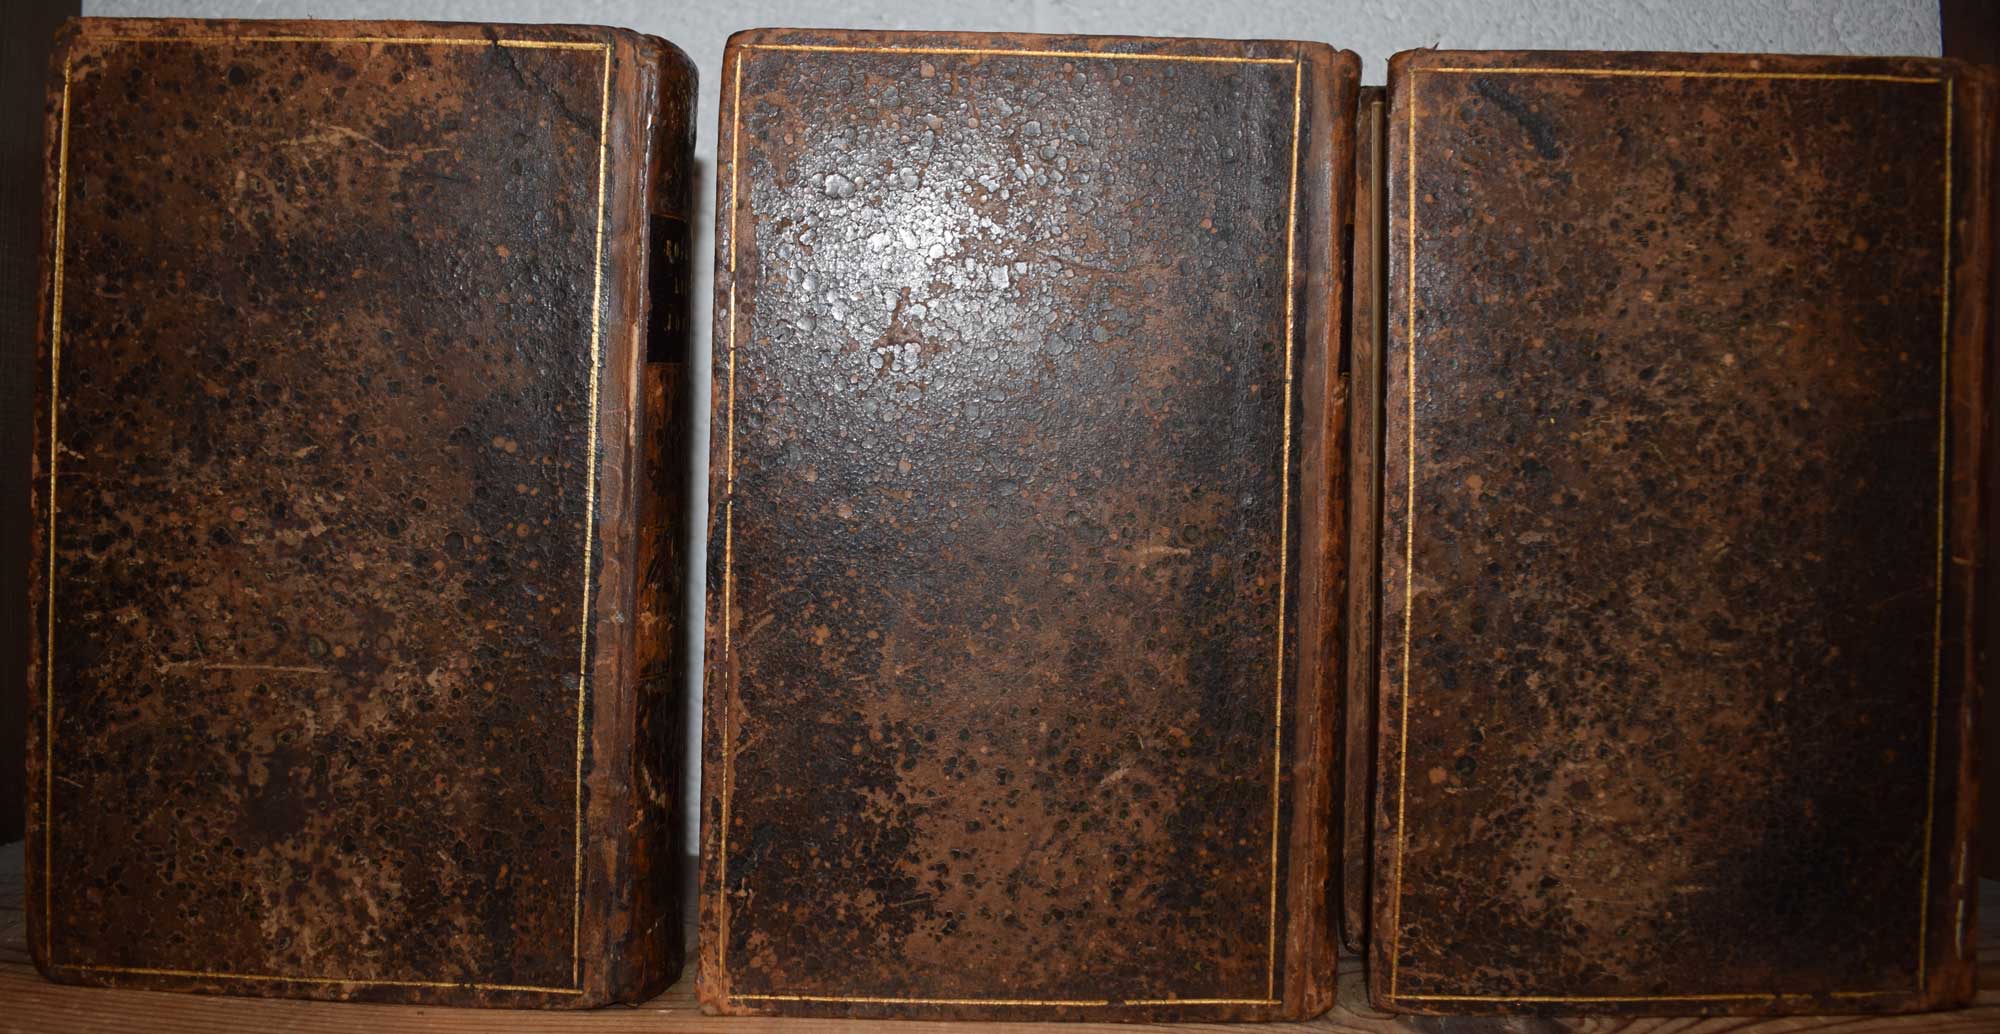 The Life of Samuel Johnson. Three volume set. Associate copy. 1793. Dilly edition.